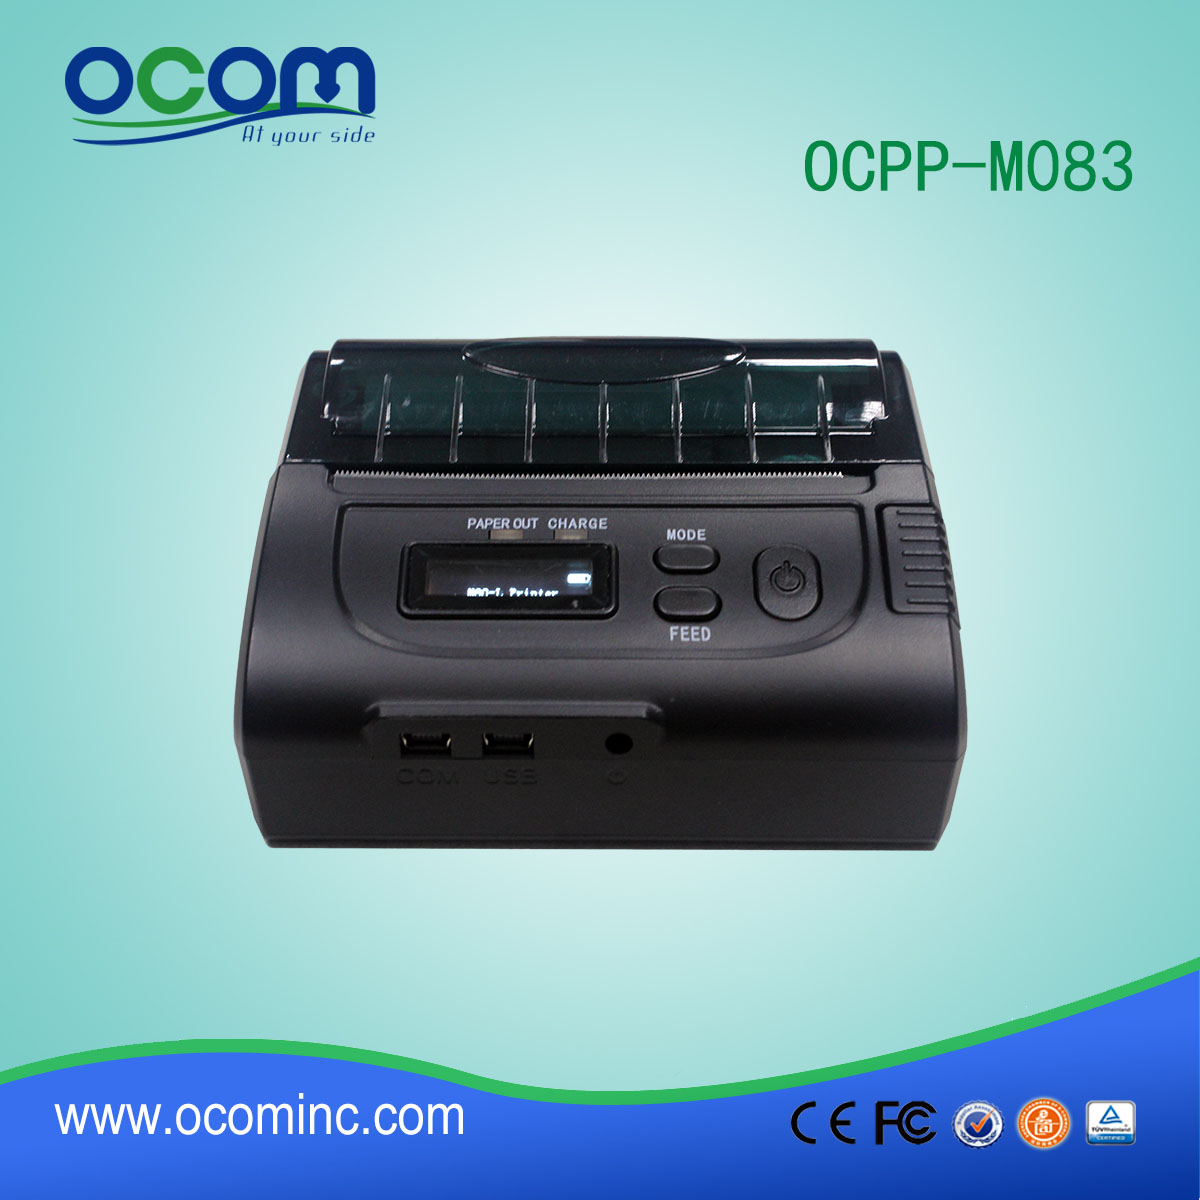 80mm Bluetooth Thermal Mini printer Pos Receipt printer OCPP-M083